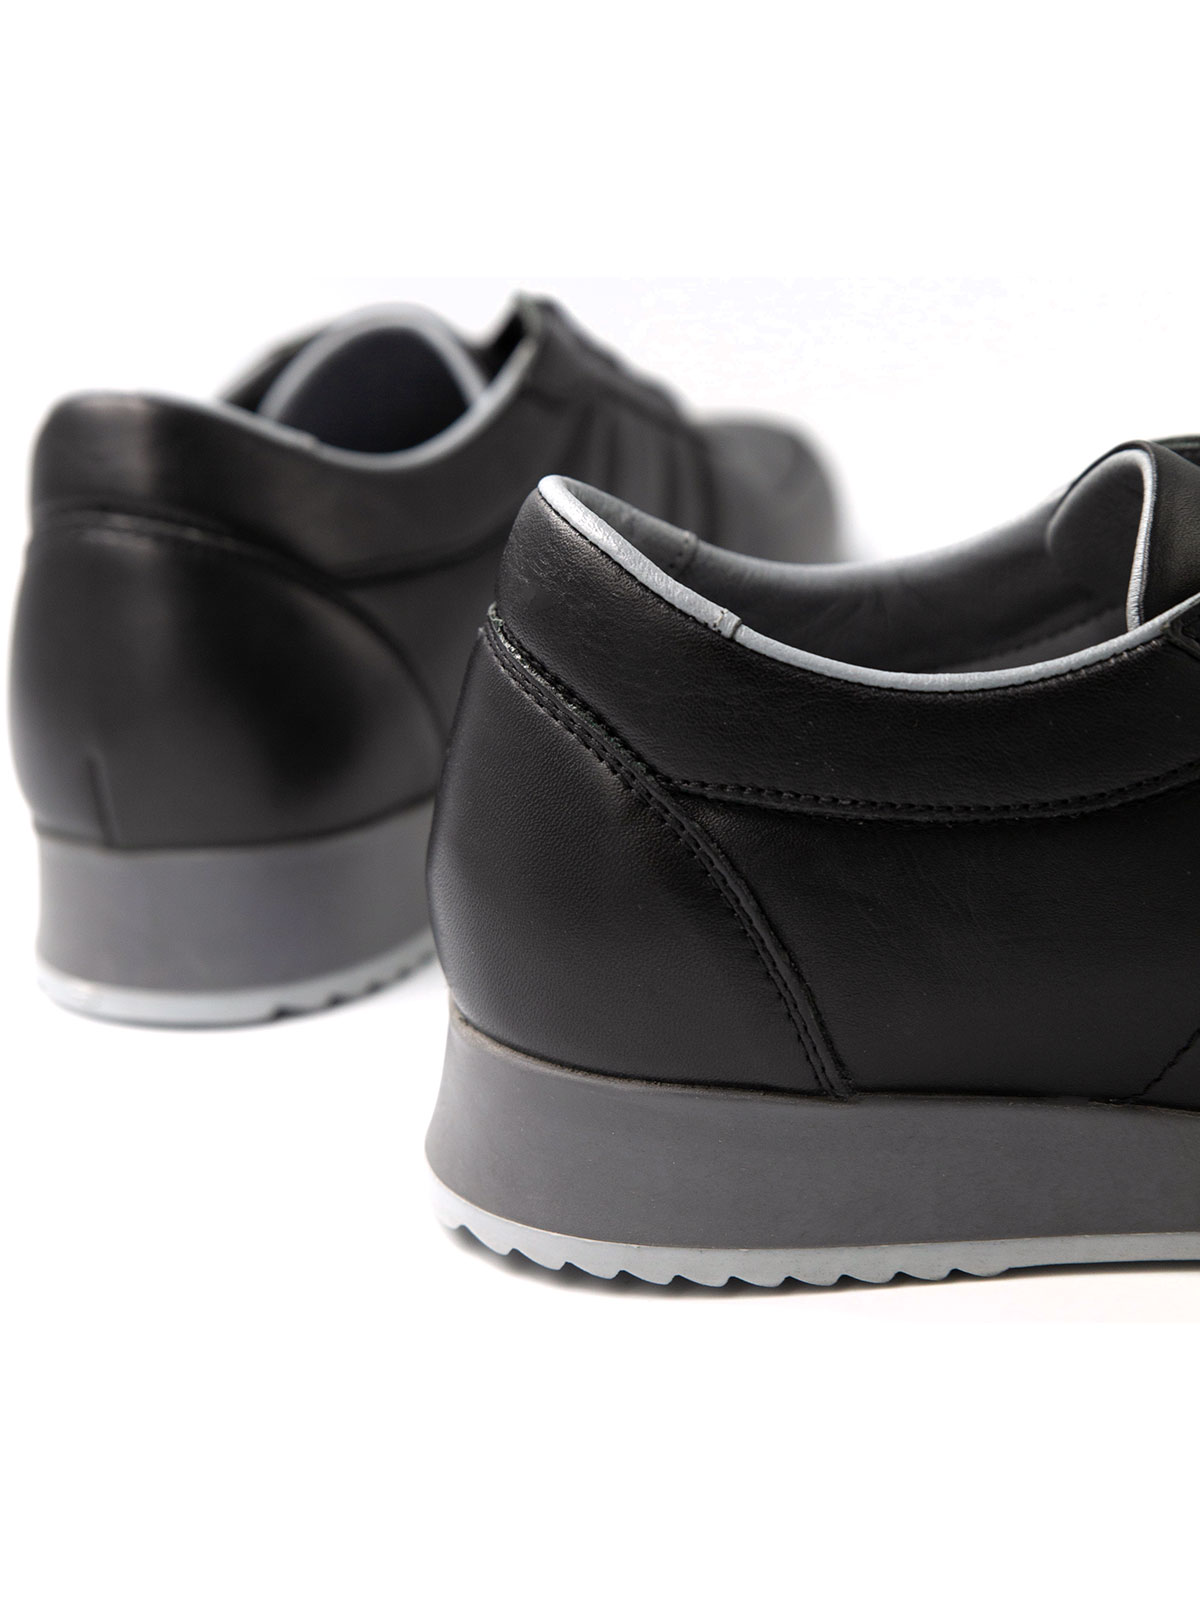 Pantofi sport din piele neagra - 81100 - € 41.62 img4